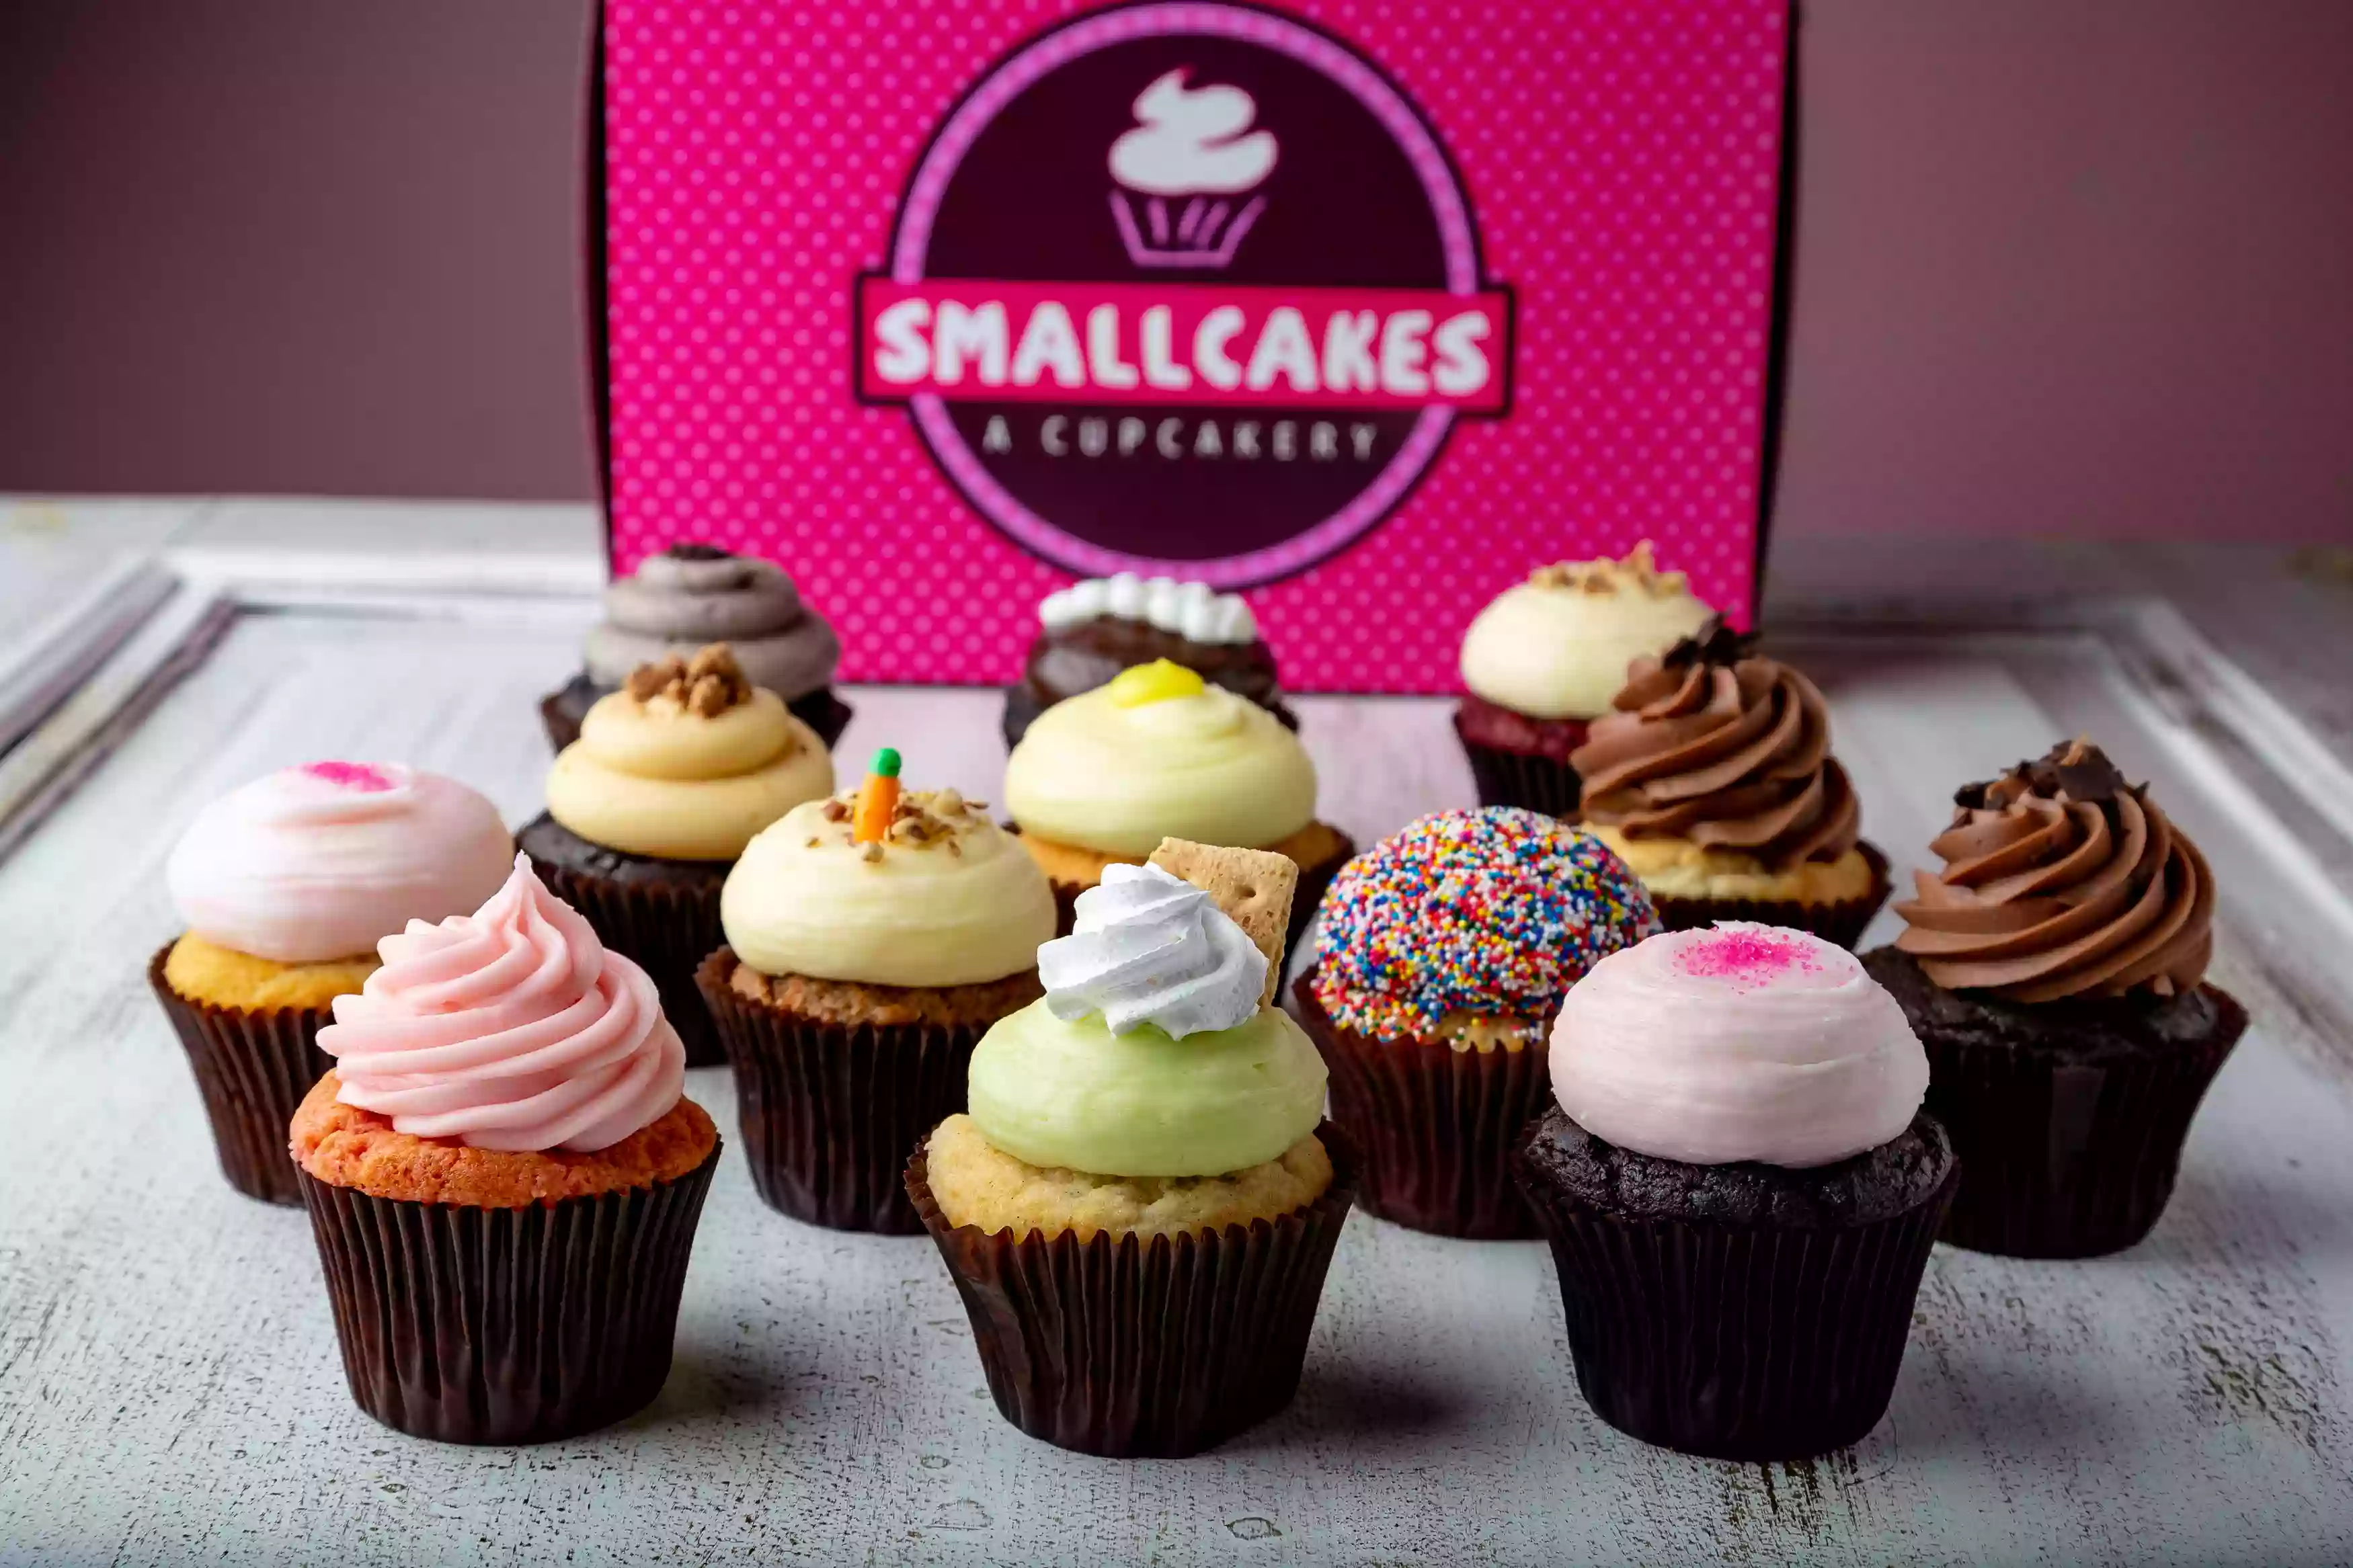 Smallcakes A Cupcakery